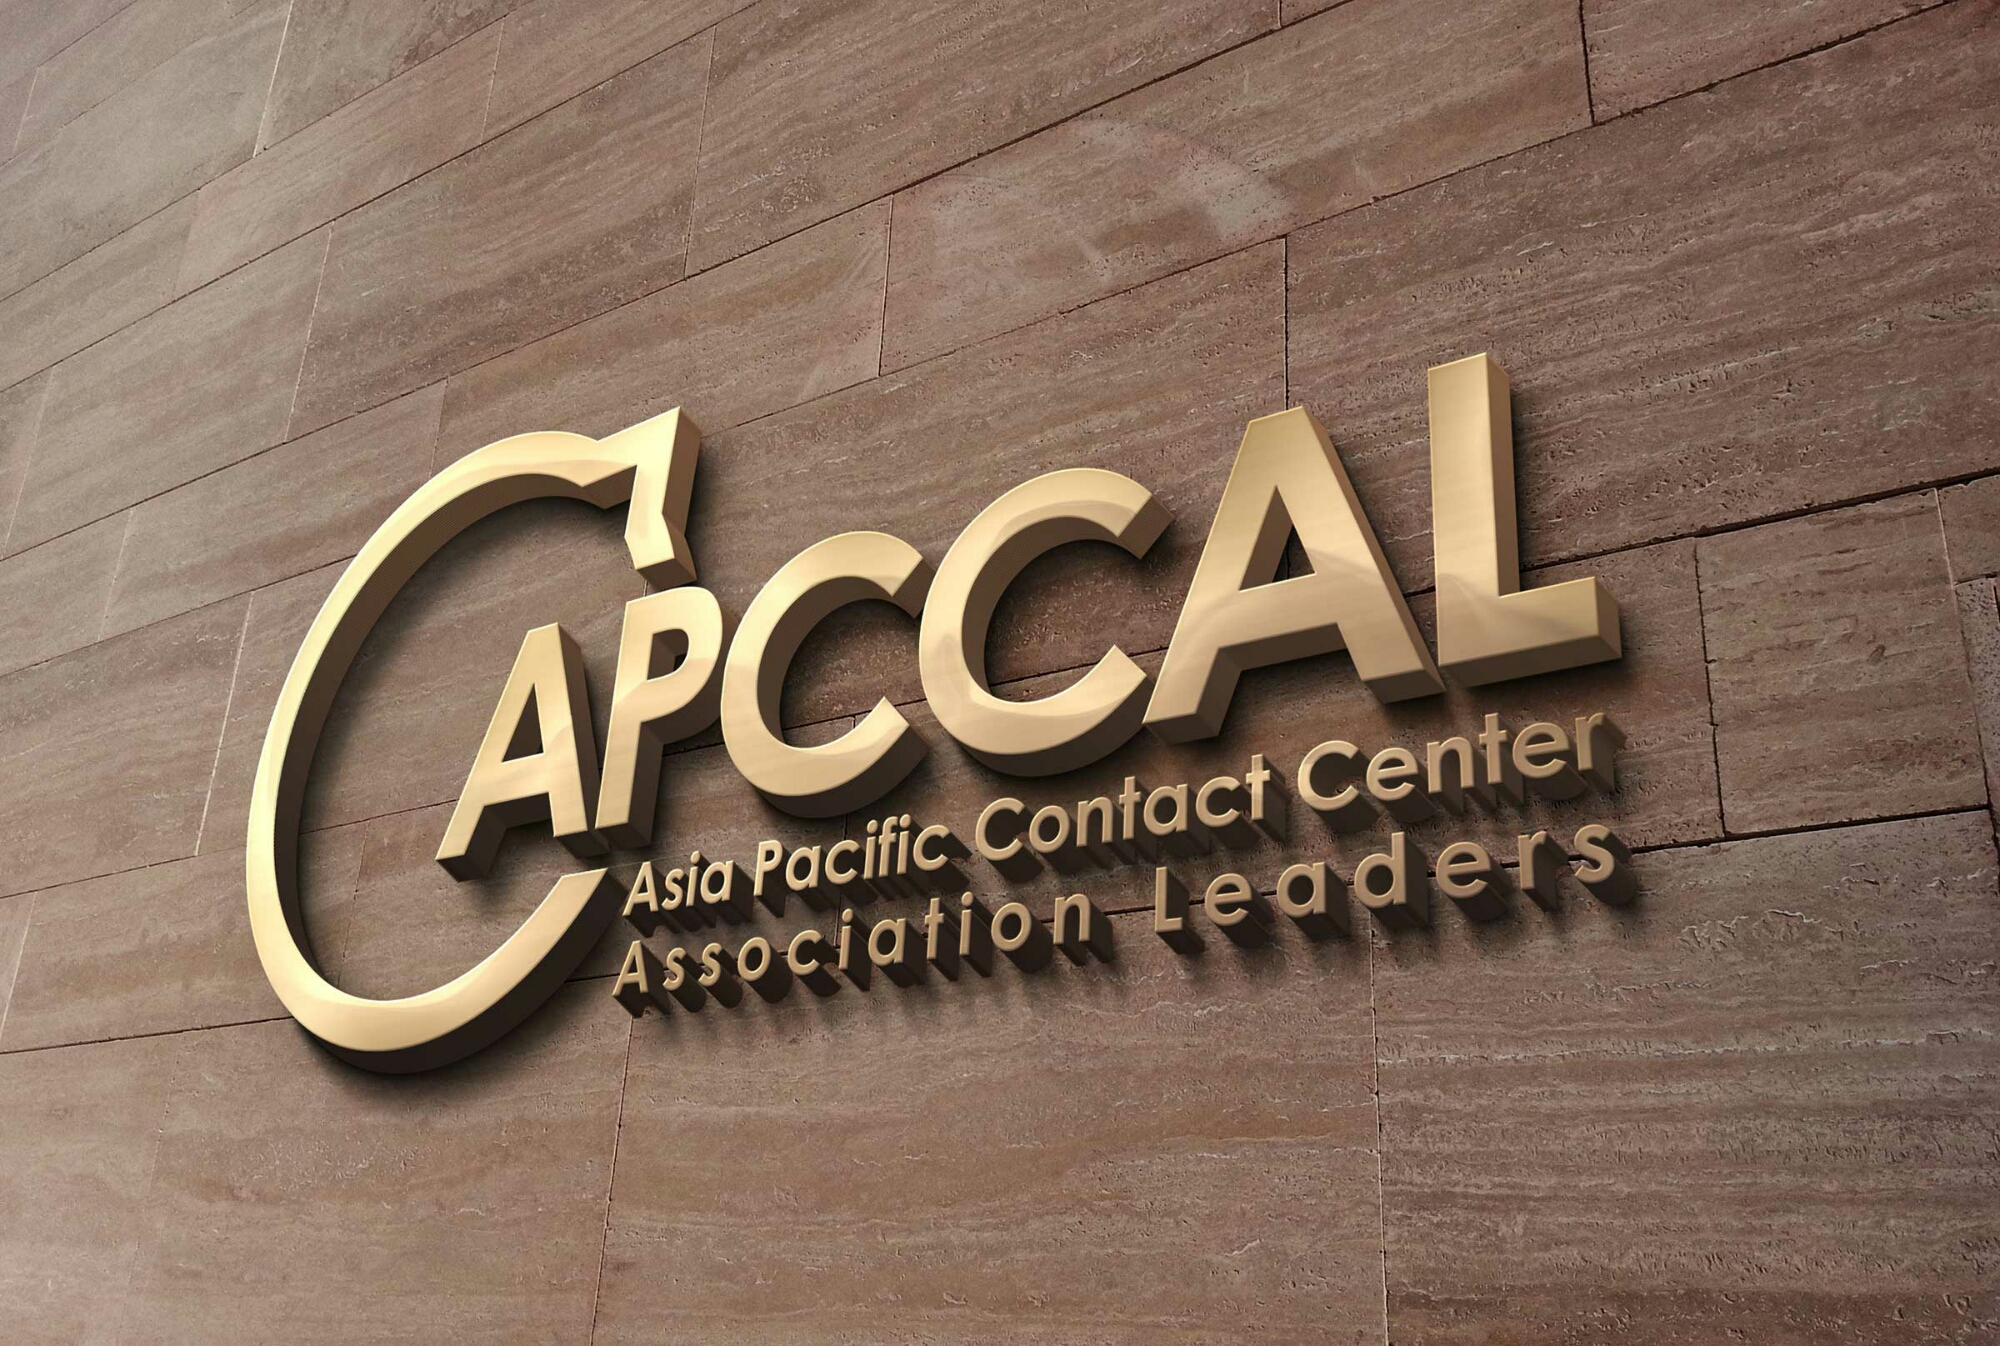 APCCAL EXPO 2015 Singapore : Customer Centricity